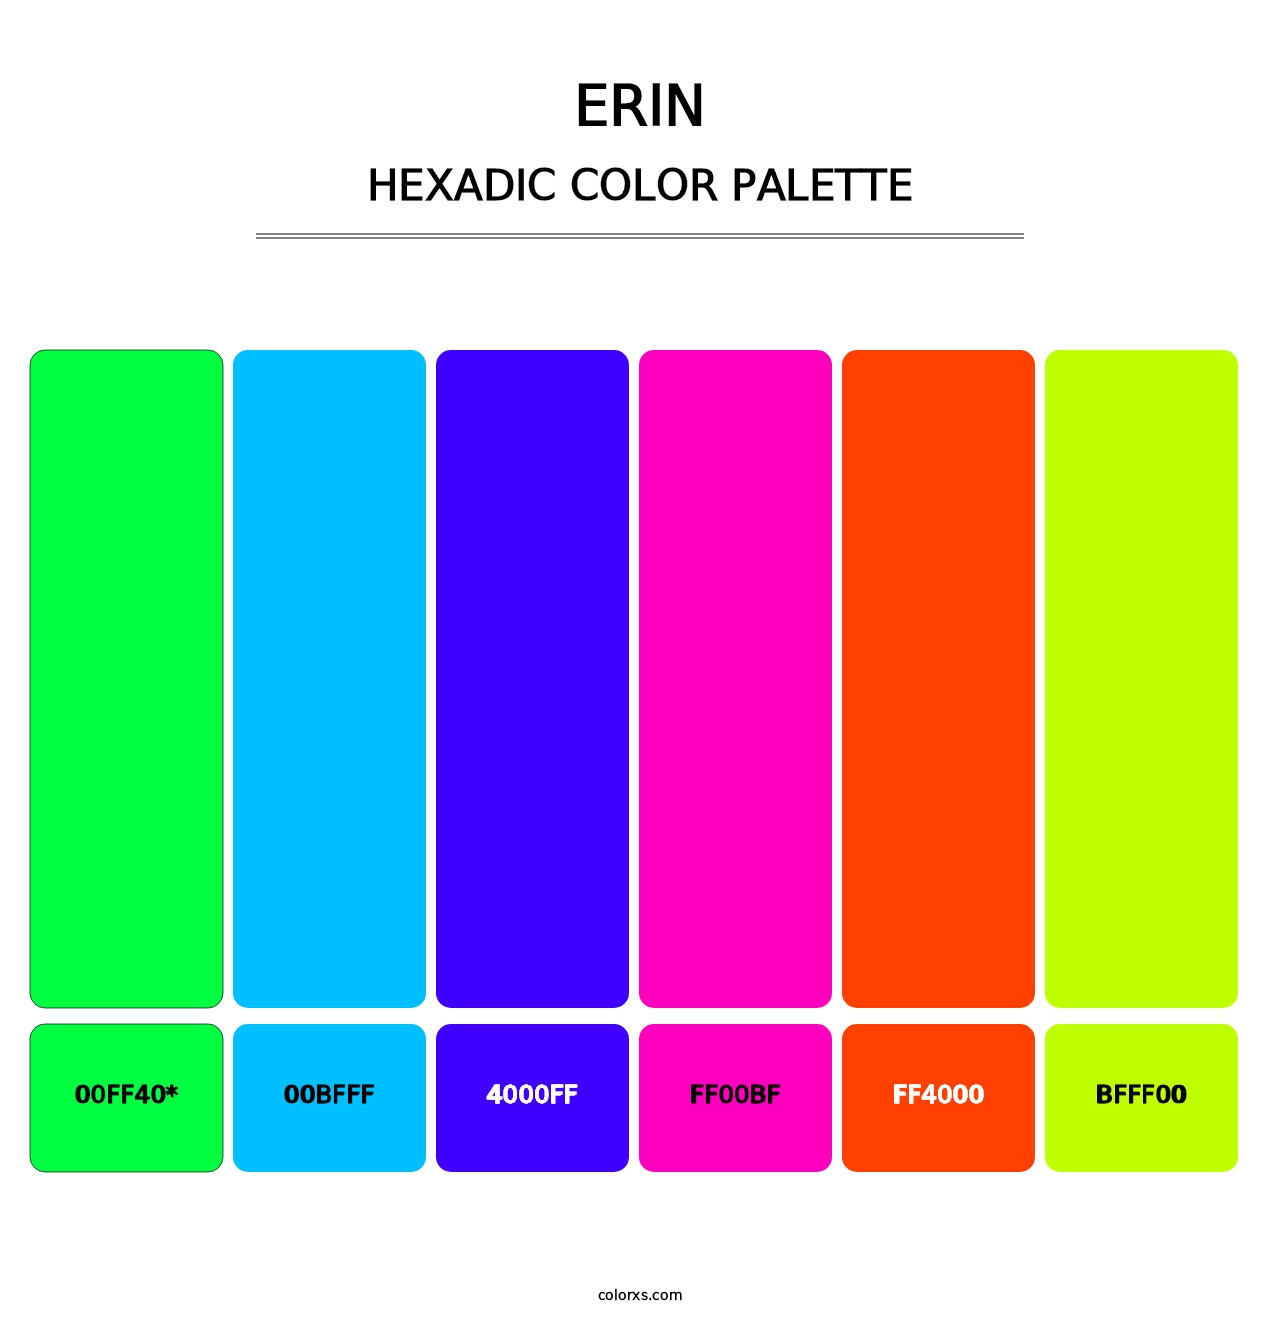 Erin - Hexadic Color Palette